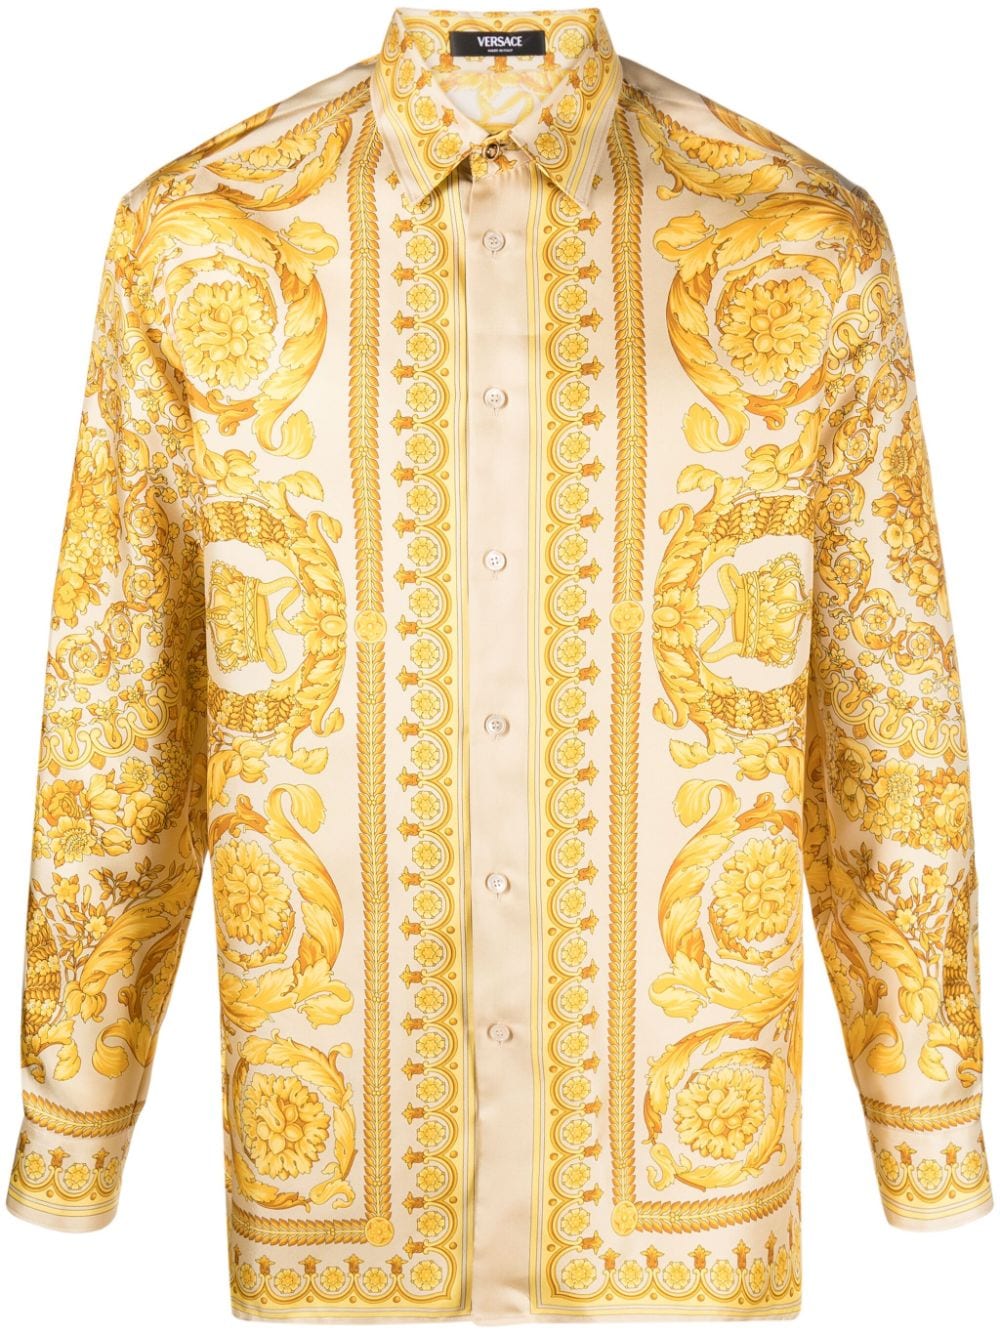 VERSACE Baroque Print Silk Shirt for Men - Champagne Gold